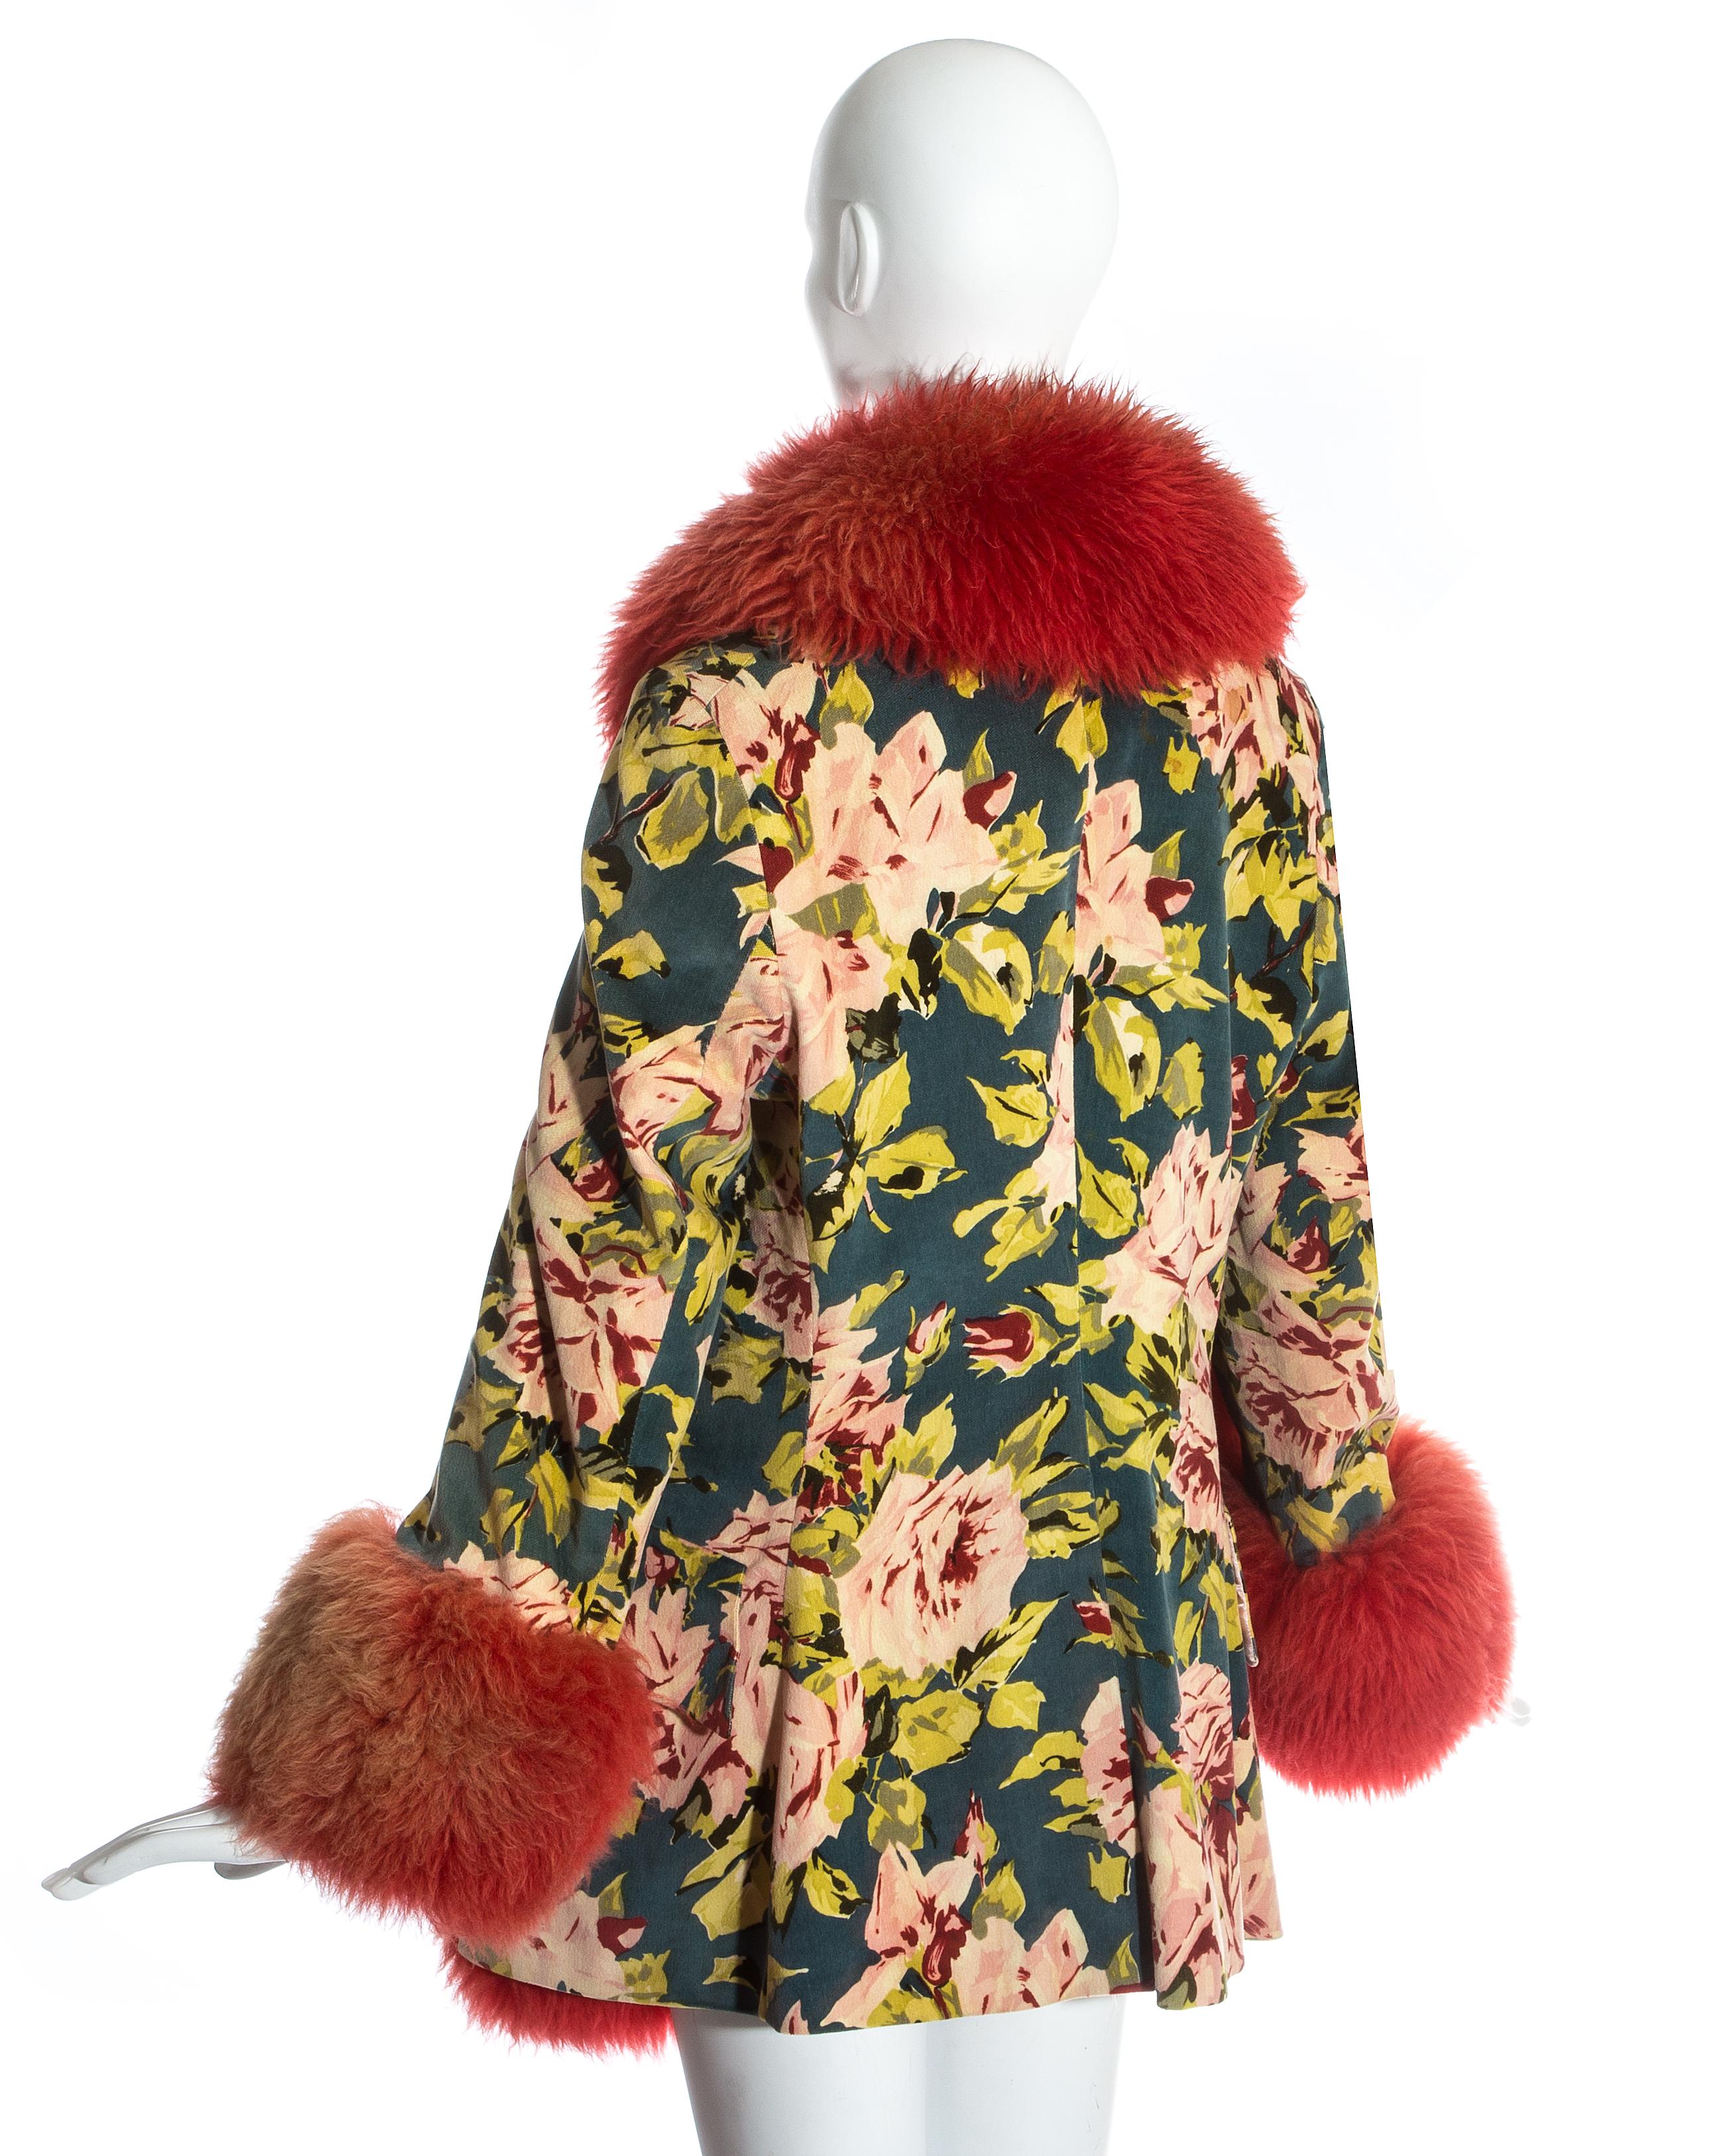 Red Vivienne Westwood red sheepskin and floral velvet jacket, fw 1994